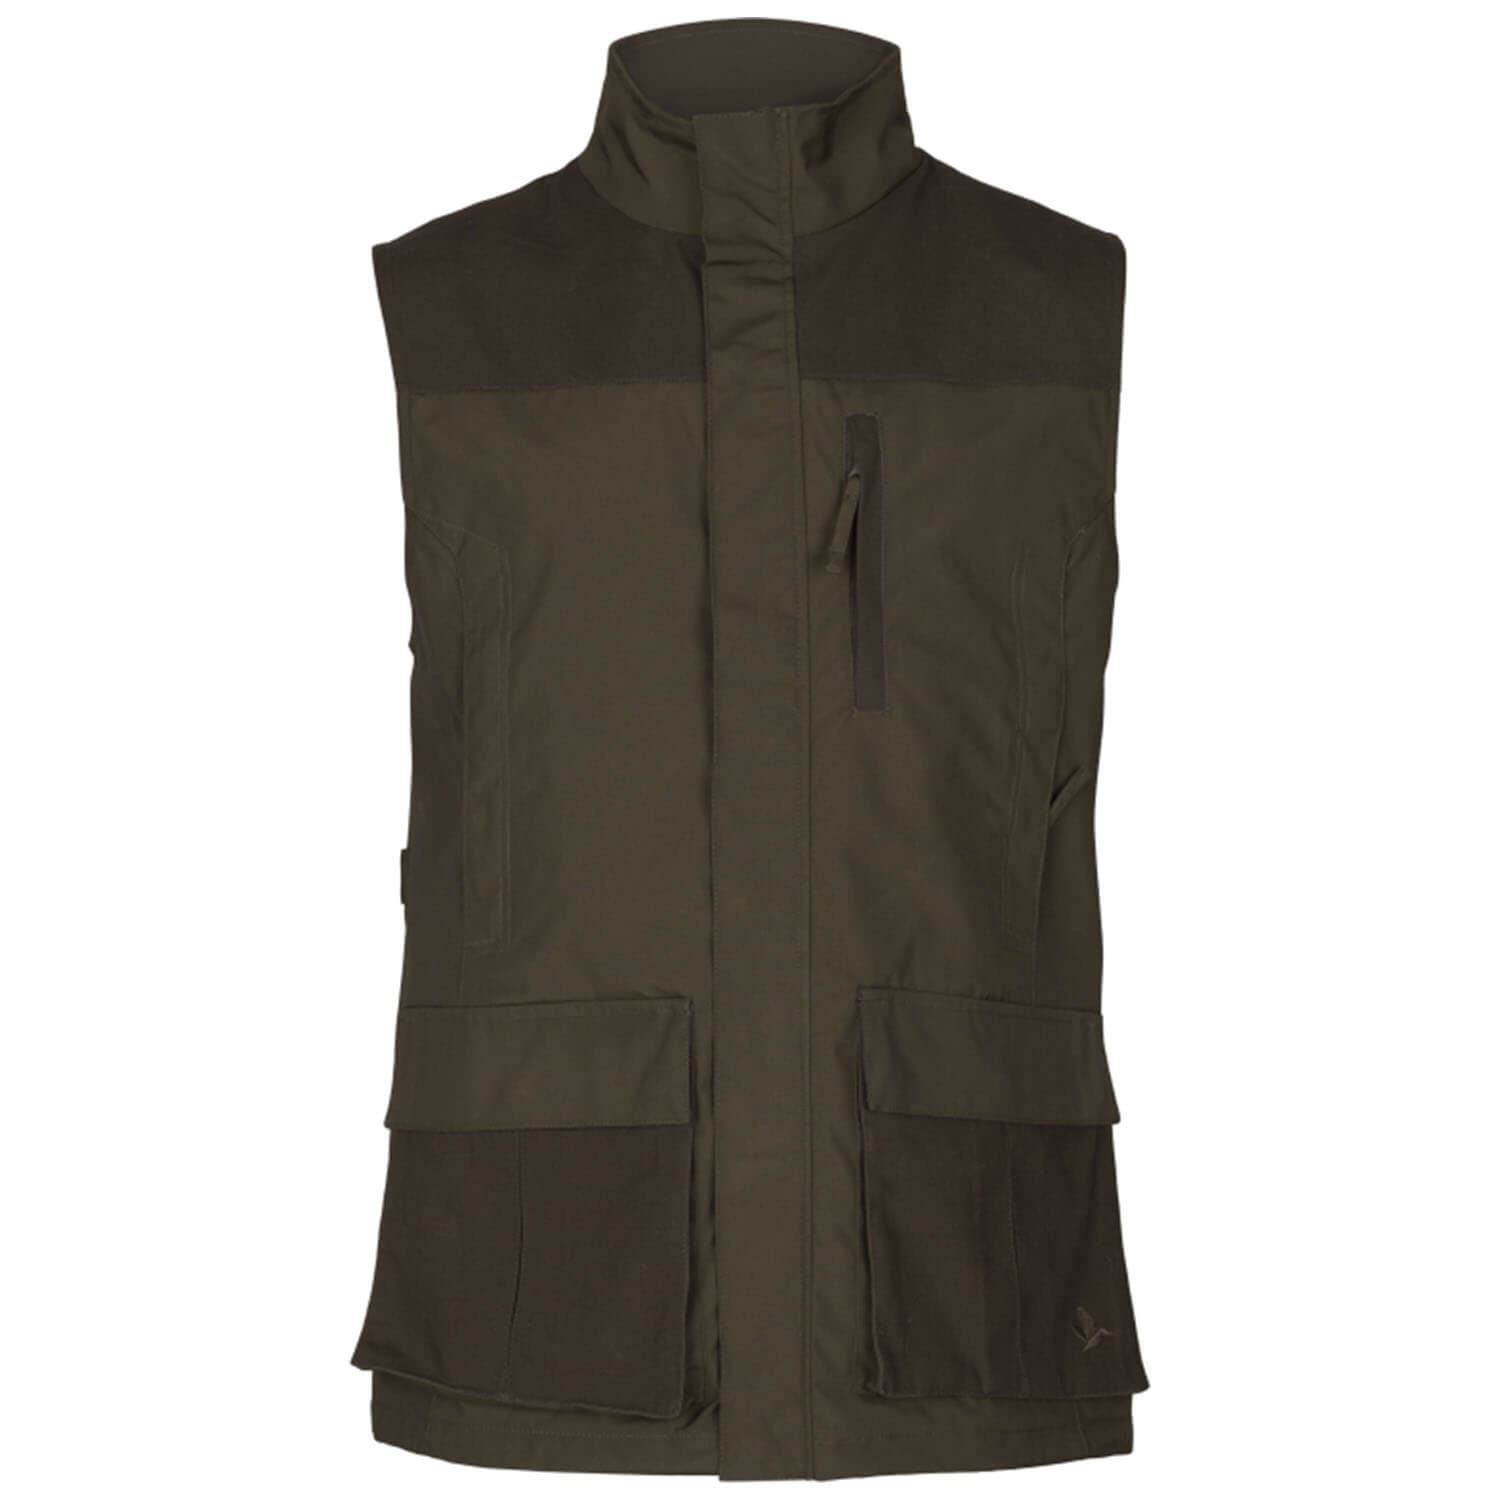  Seeland Arden hunting waistcoat (Pine Green)